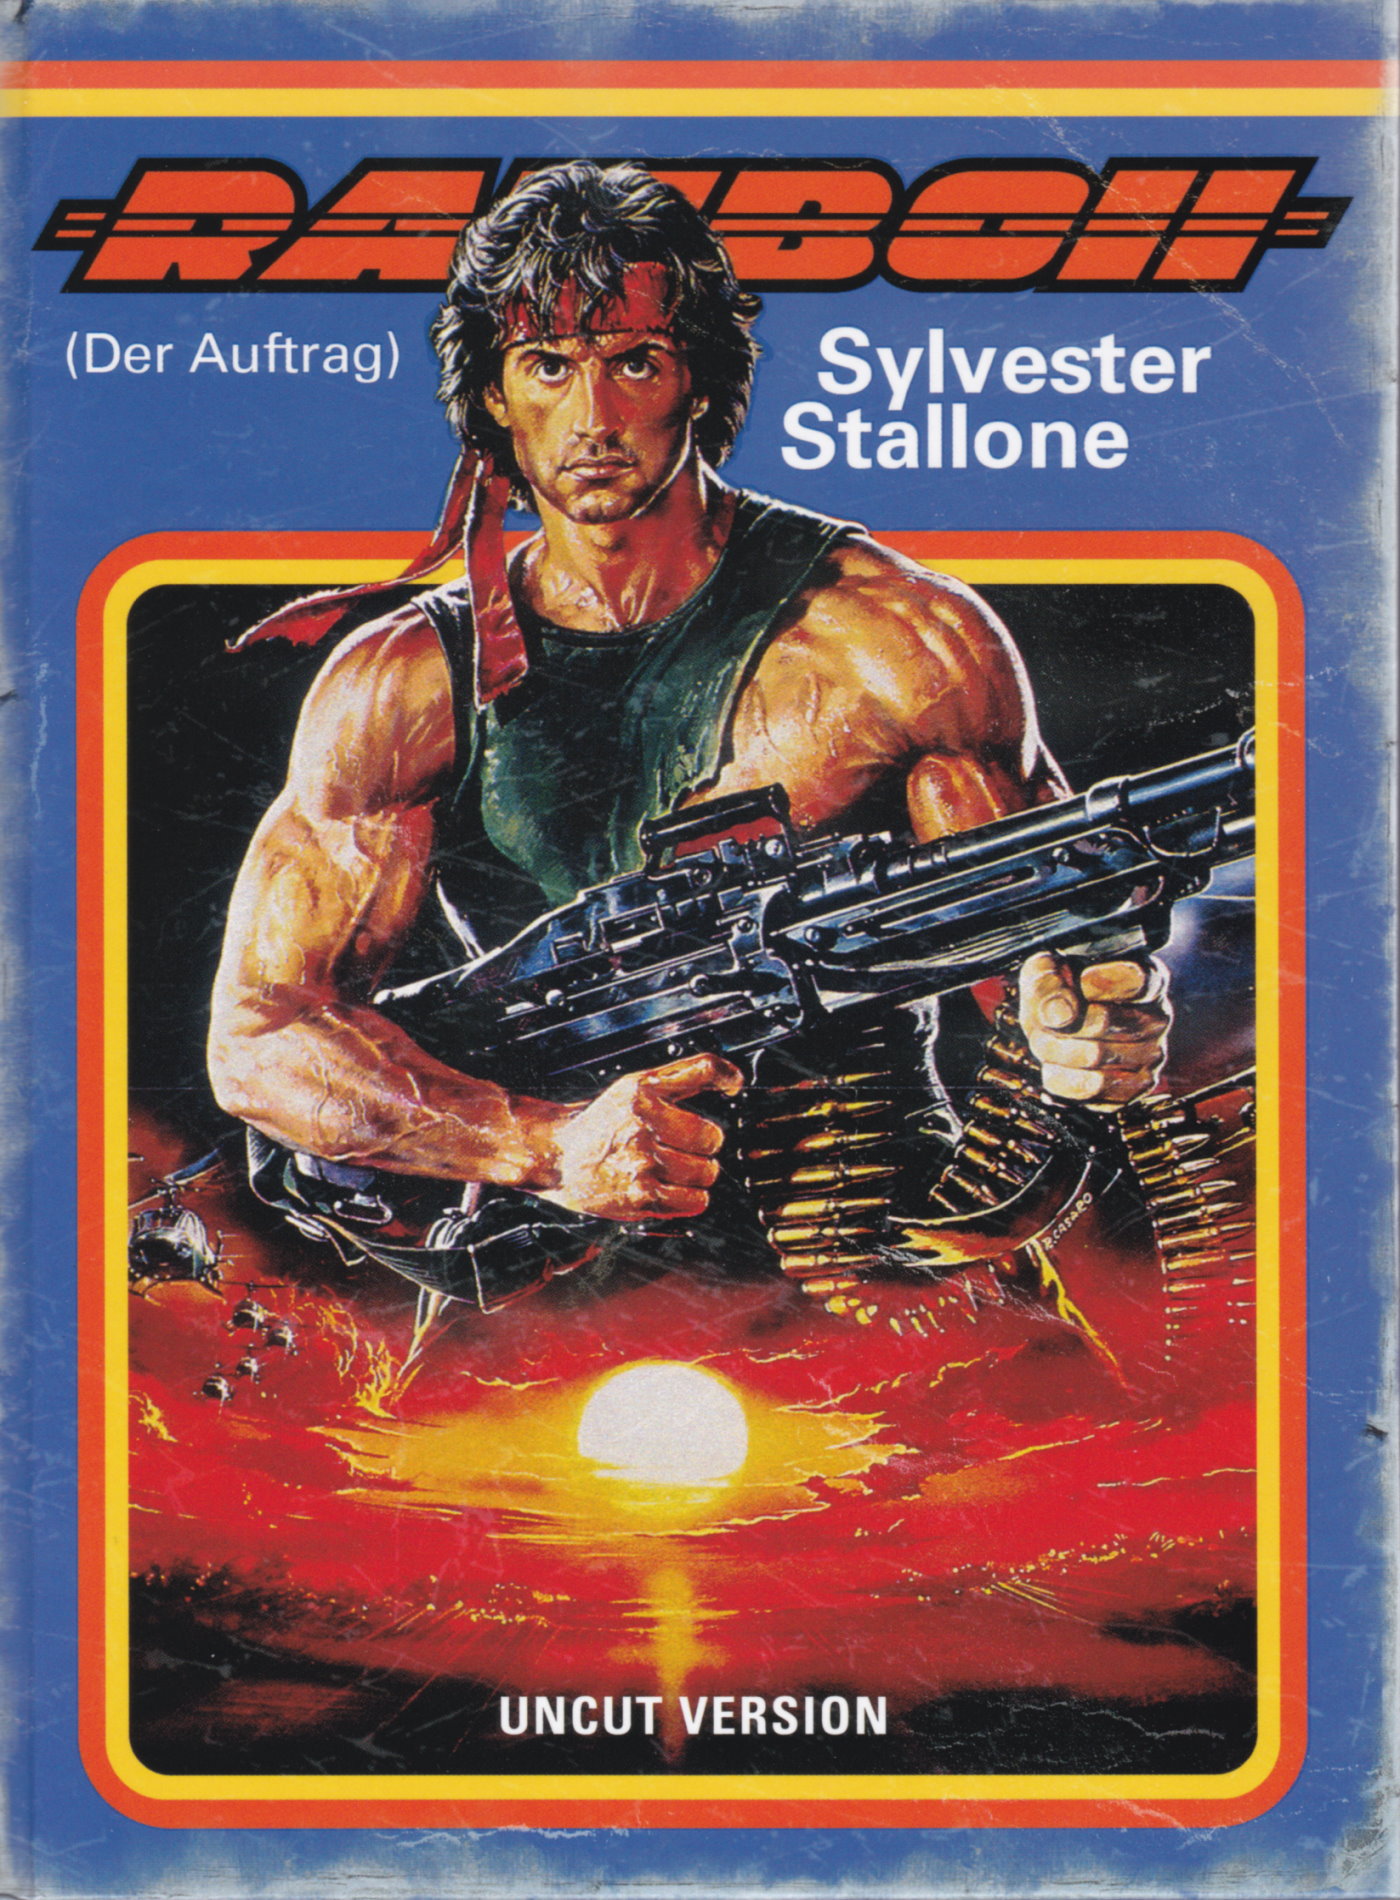 Cover - Rambo II - Der Auftrag.jpg